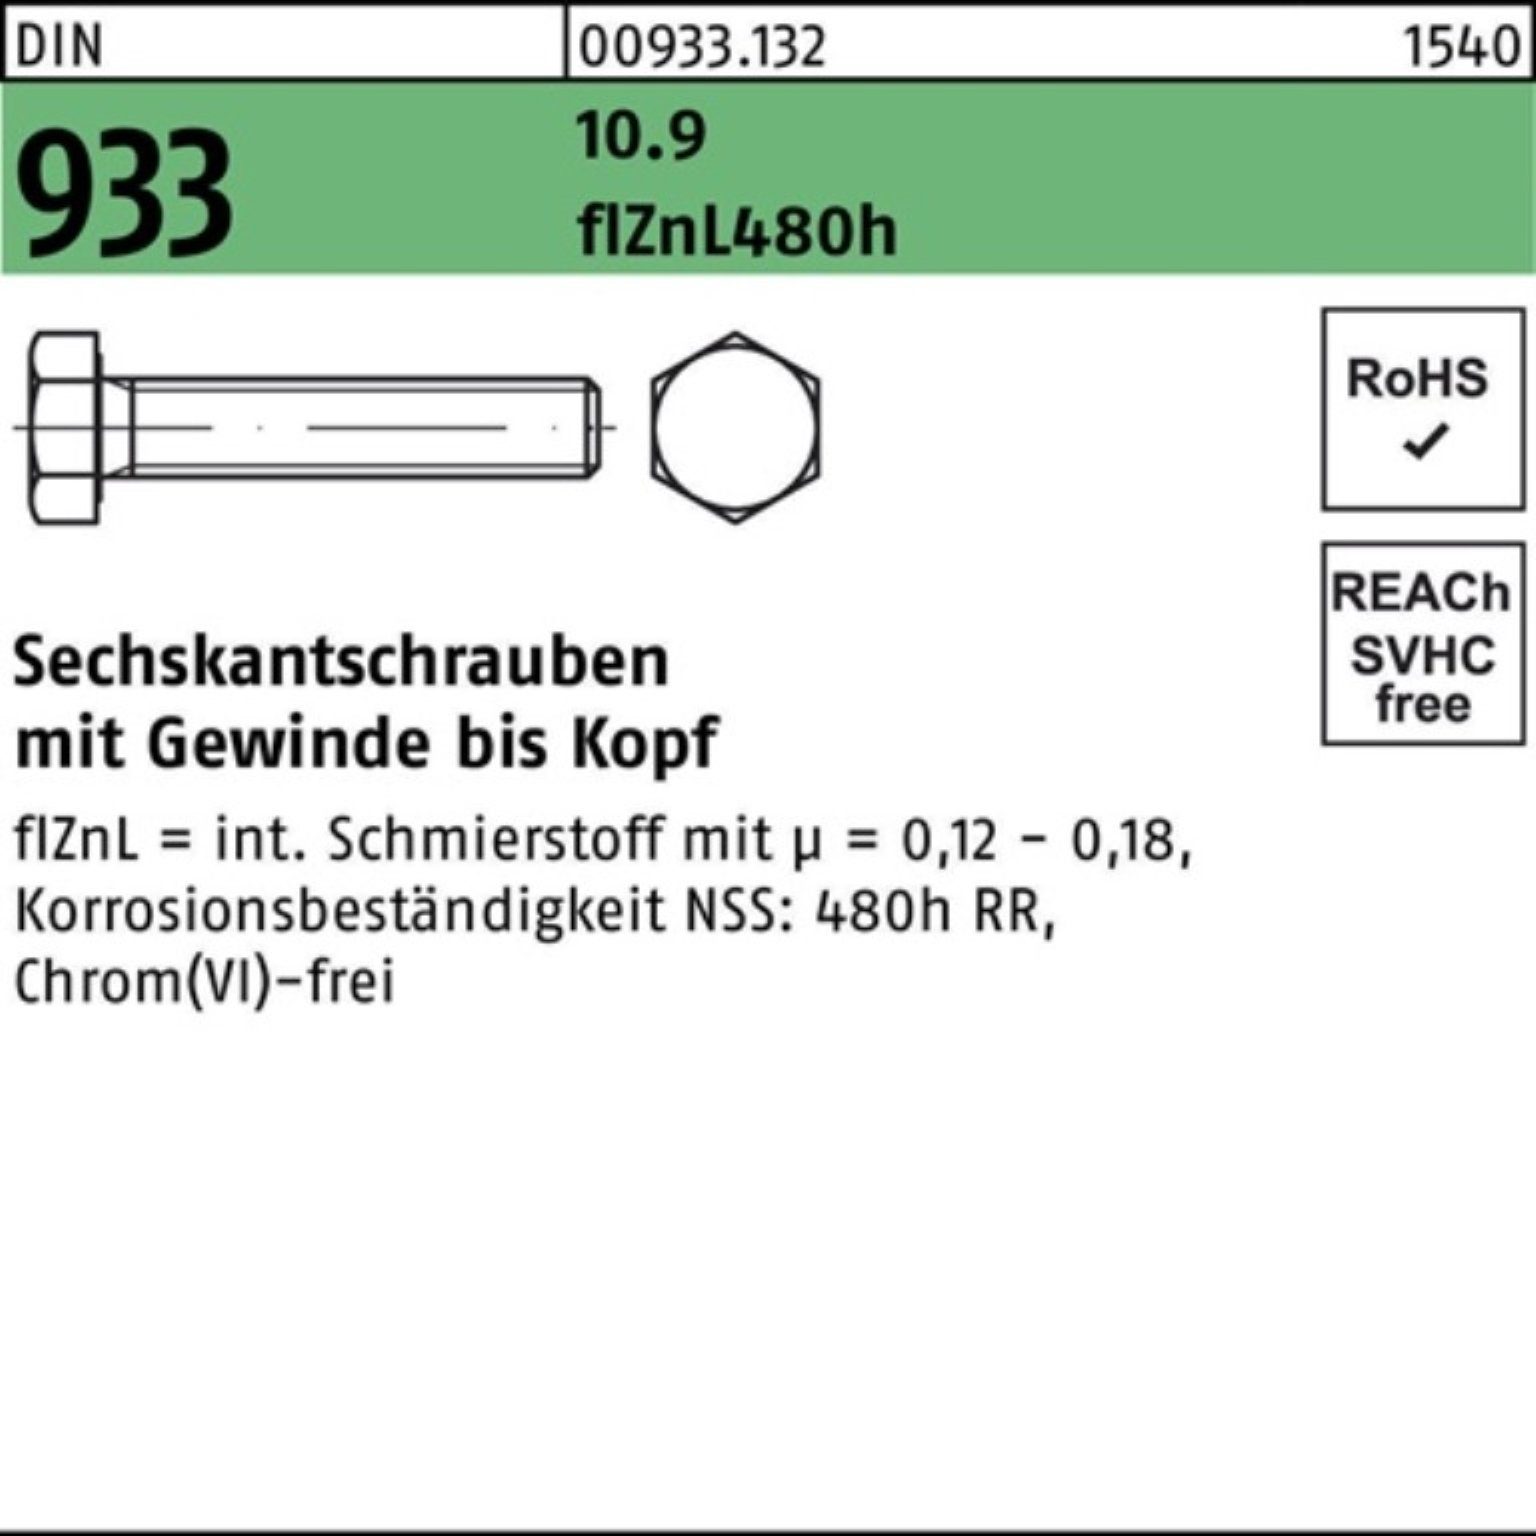 Reyher Sechskantschraube 200er Pack Sechskantschraube DIN 933 VG M6x 55 10.9 flZnL/nc/x/x/480h